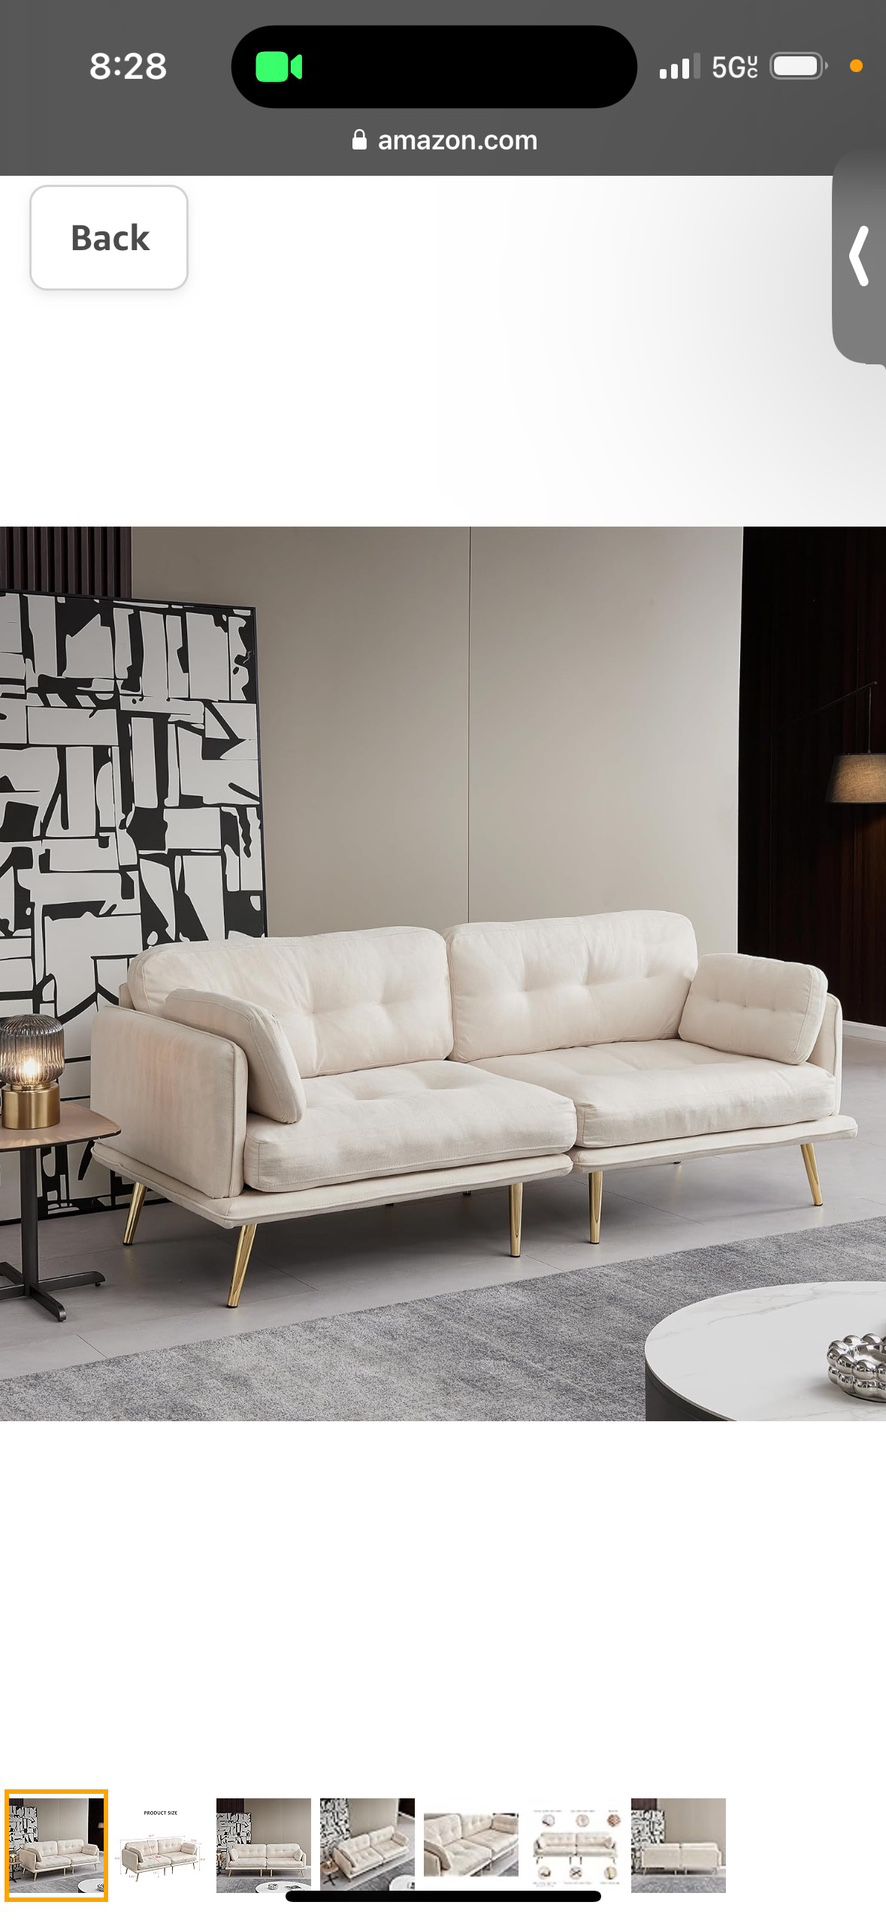 Brand New 3 Seater White Sofa